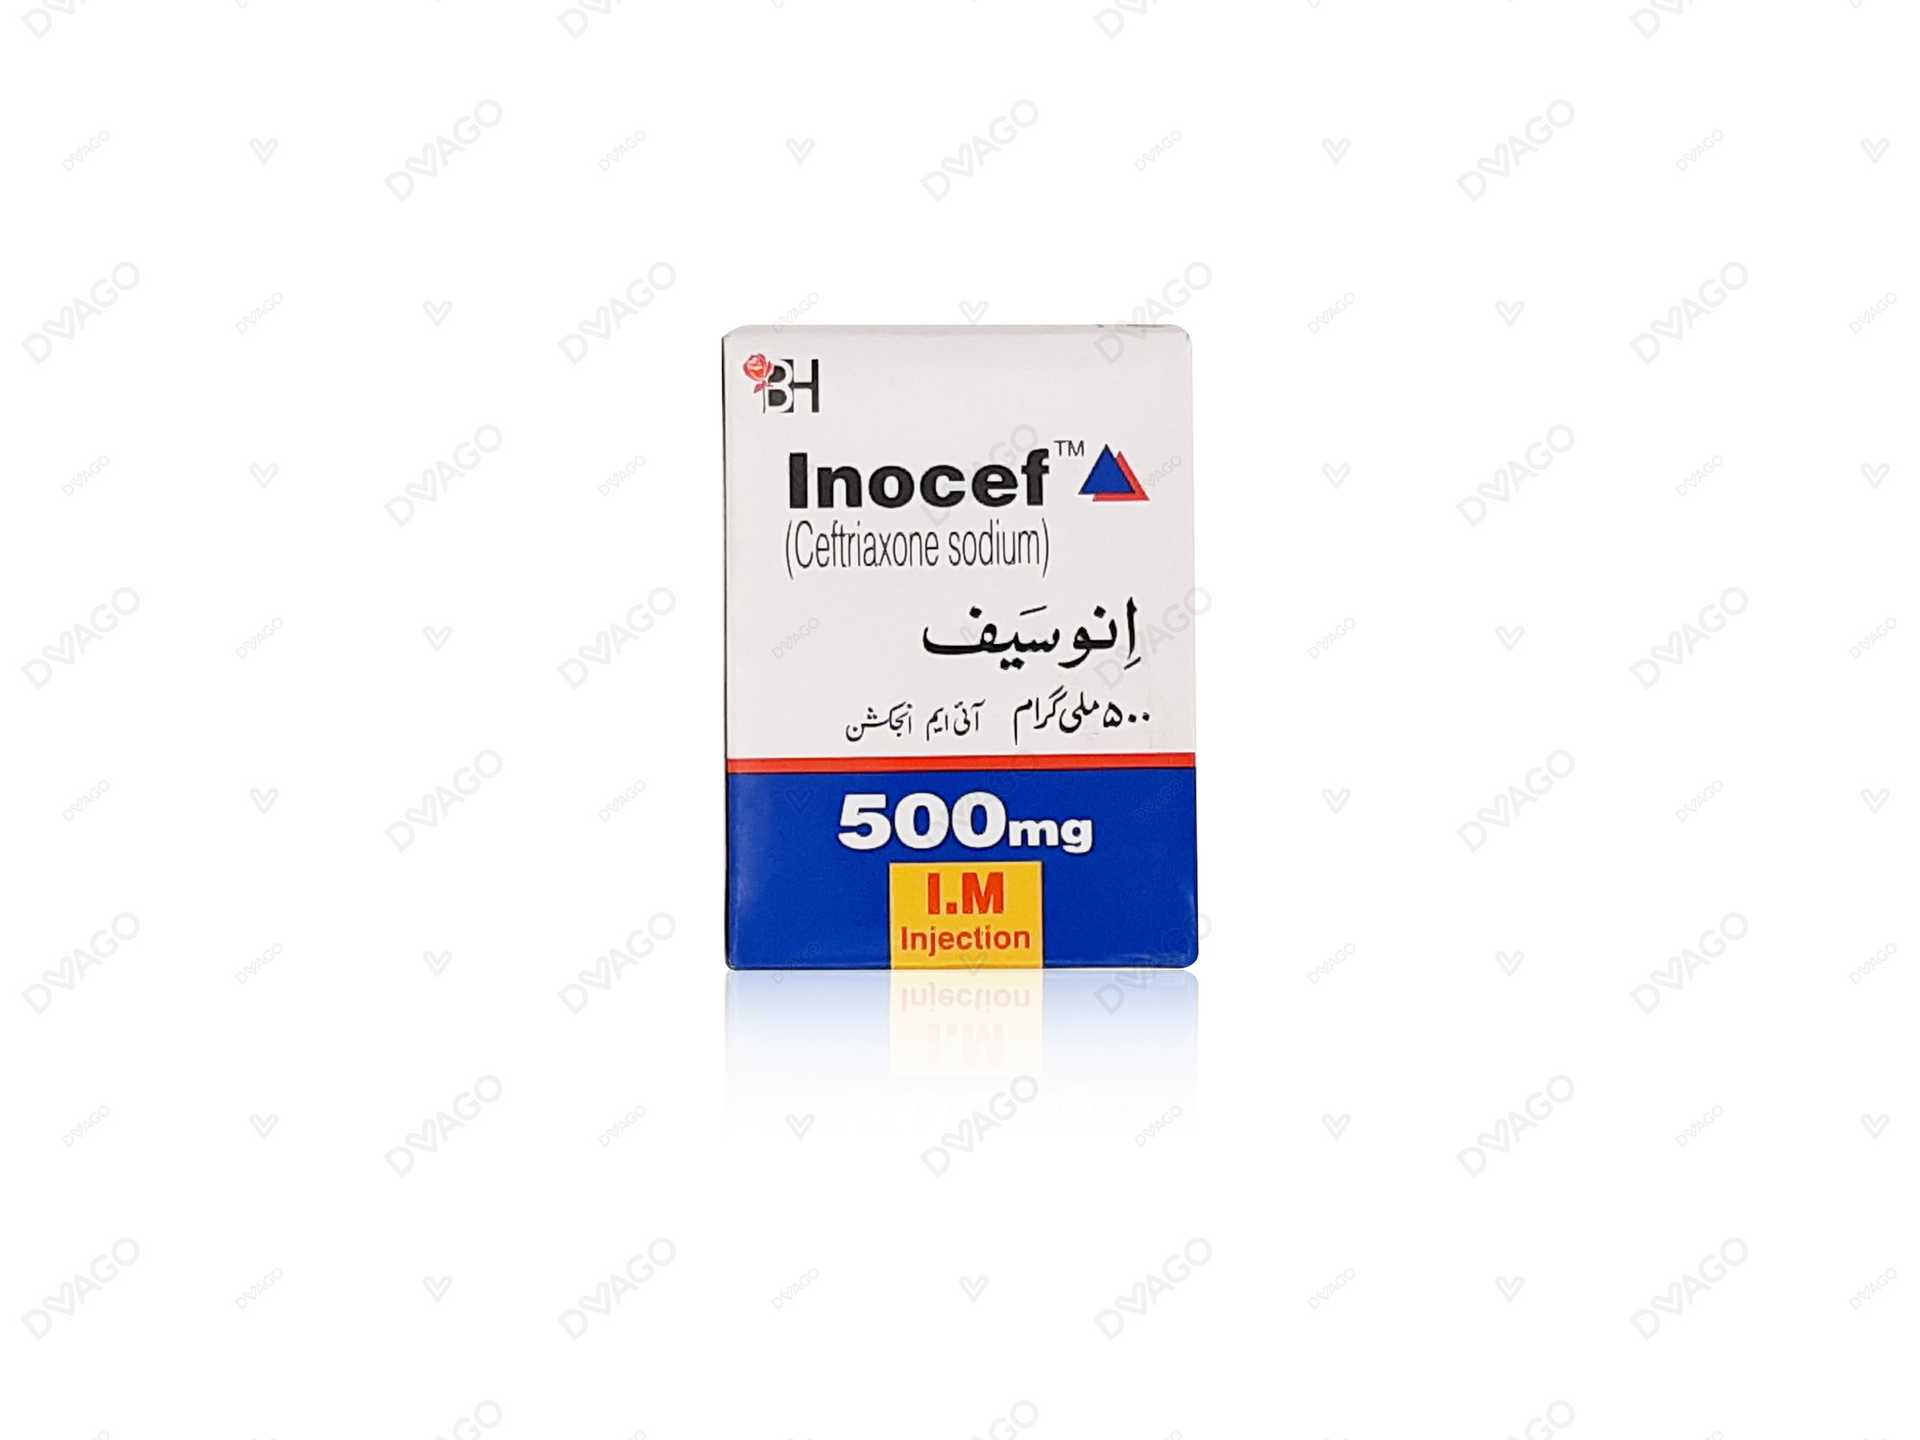 inocef injection 500mg i.m